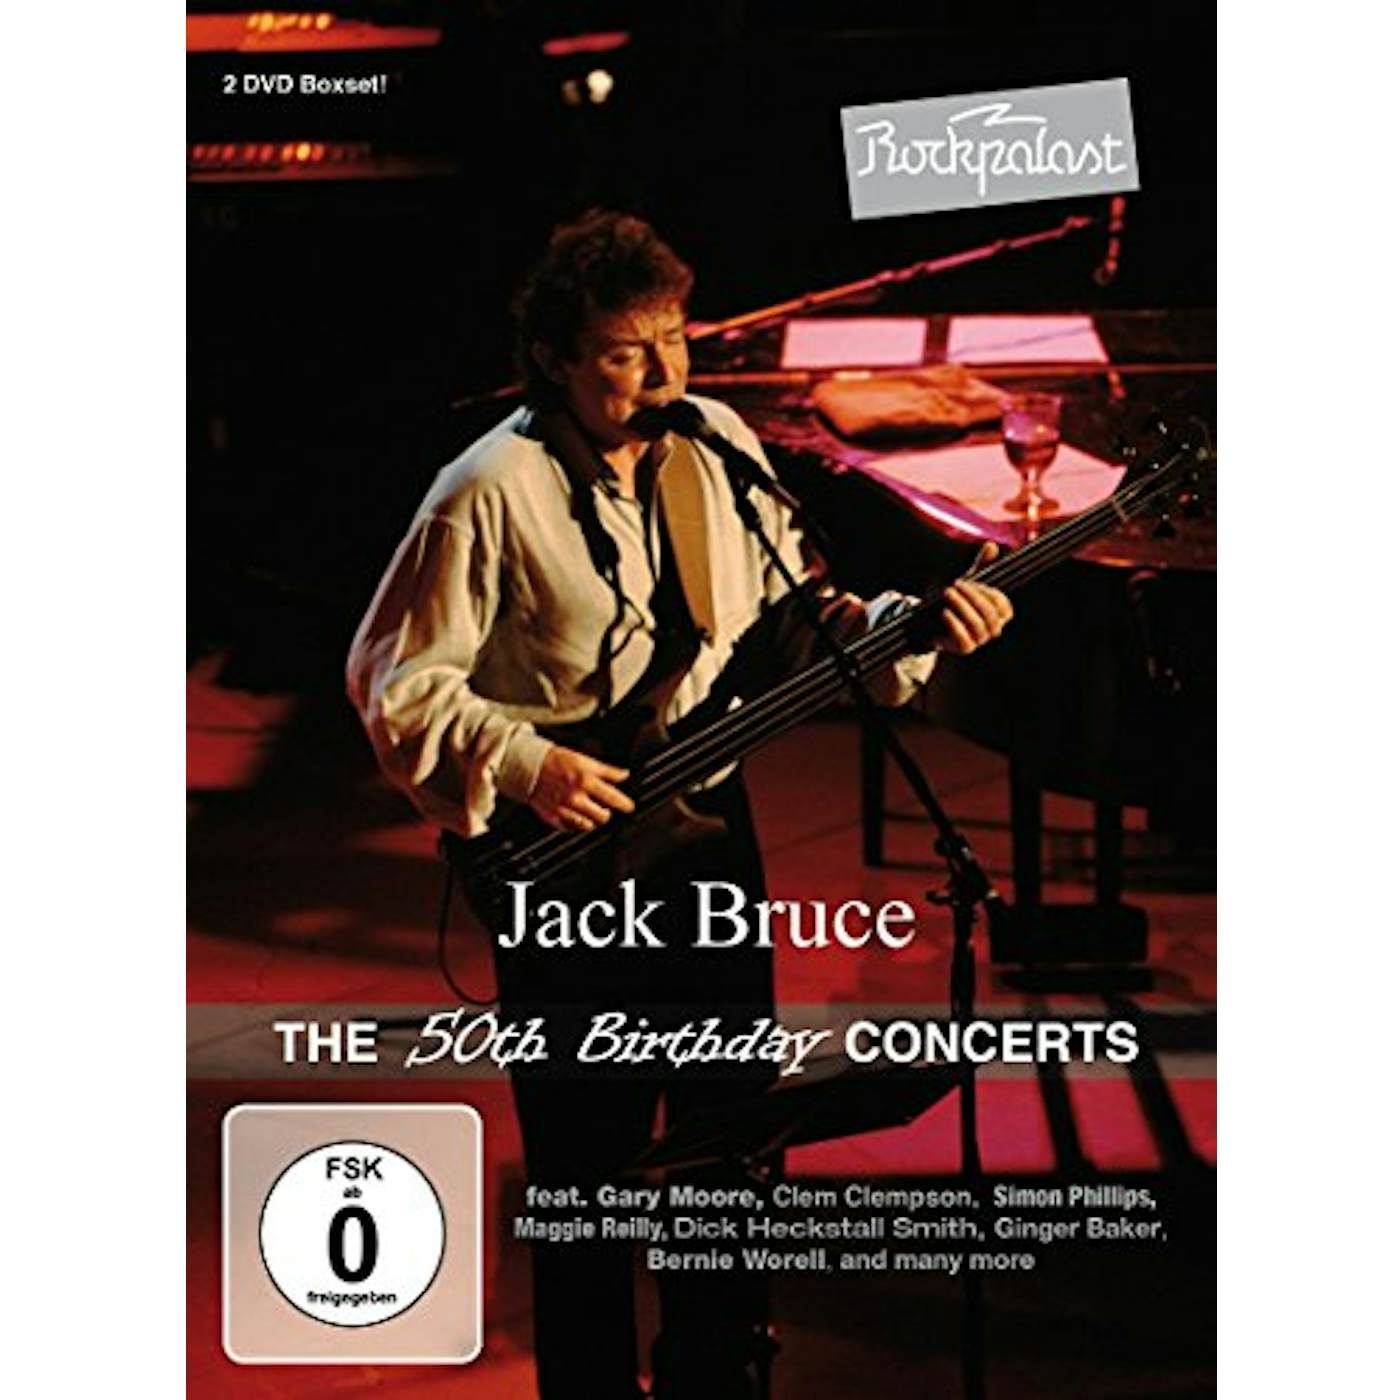 Jack Bruce ROCKPALAST: 50TH BIRTHDAY CONCERTS DVD